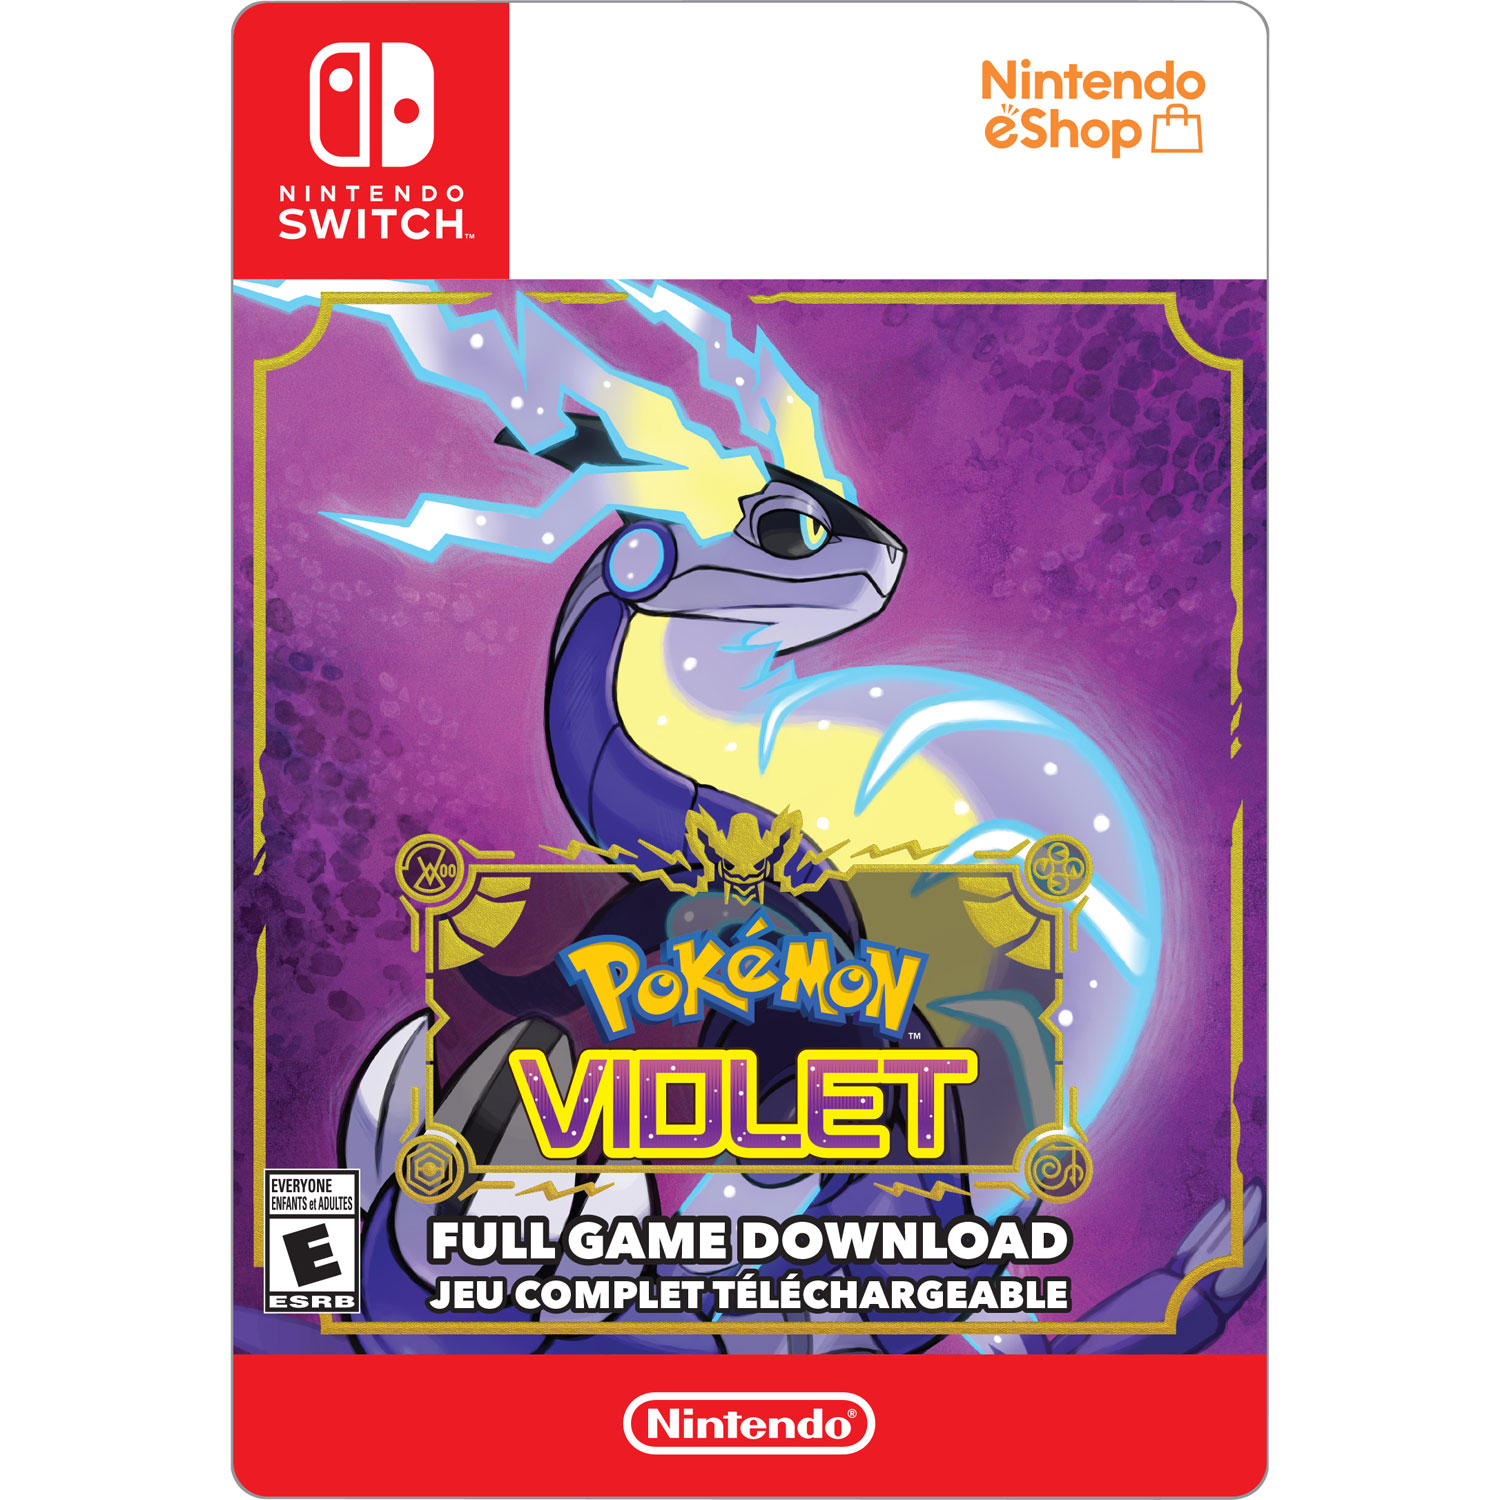 Pokémon Violet (Switch) - Digital Download